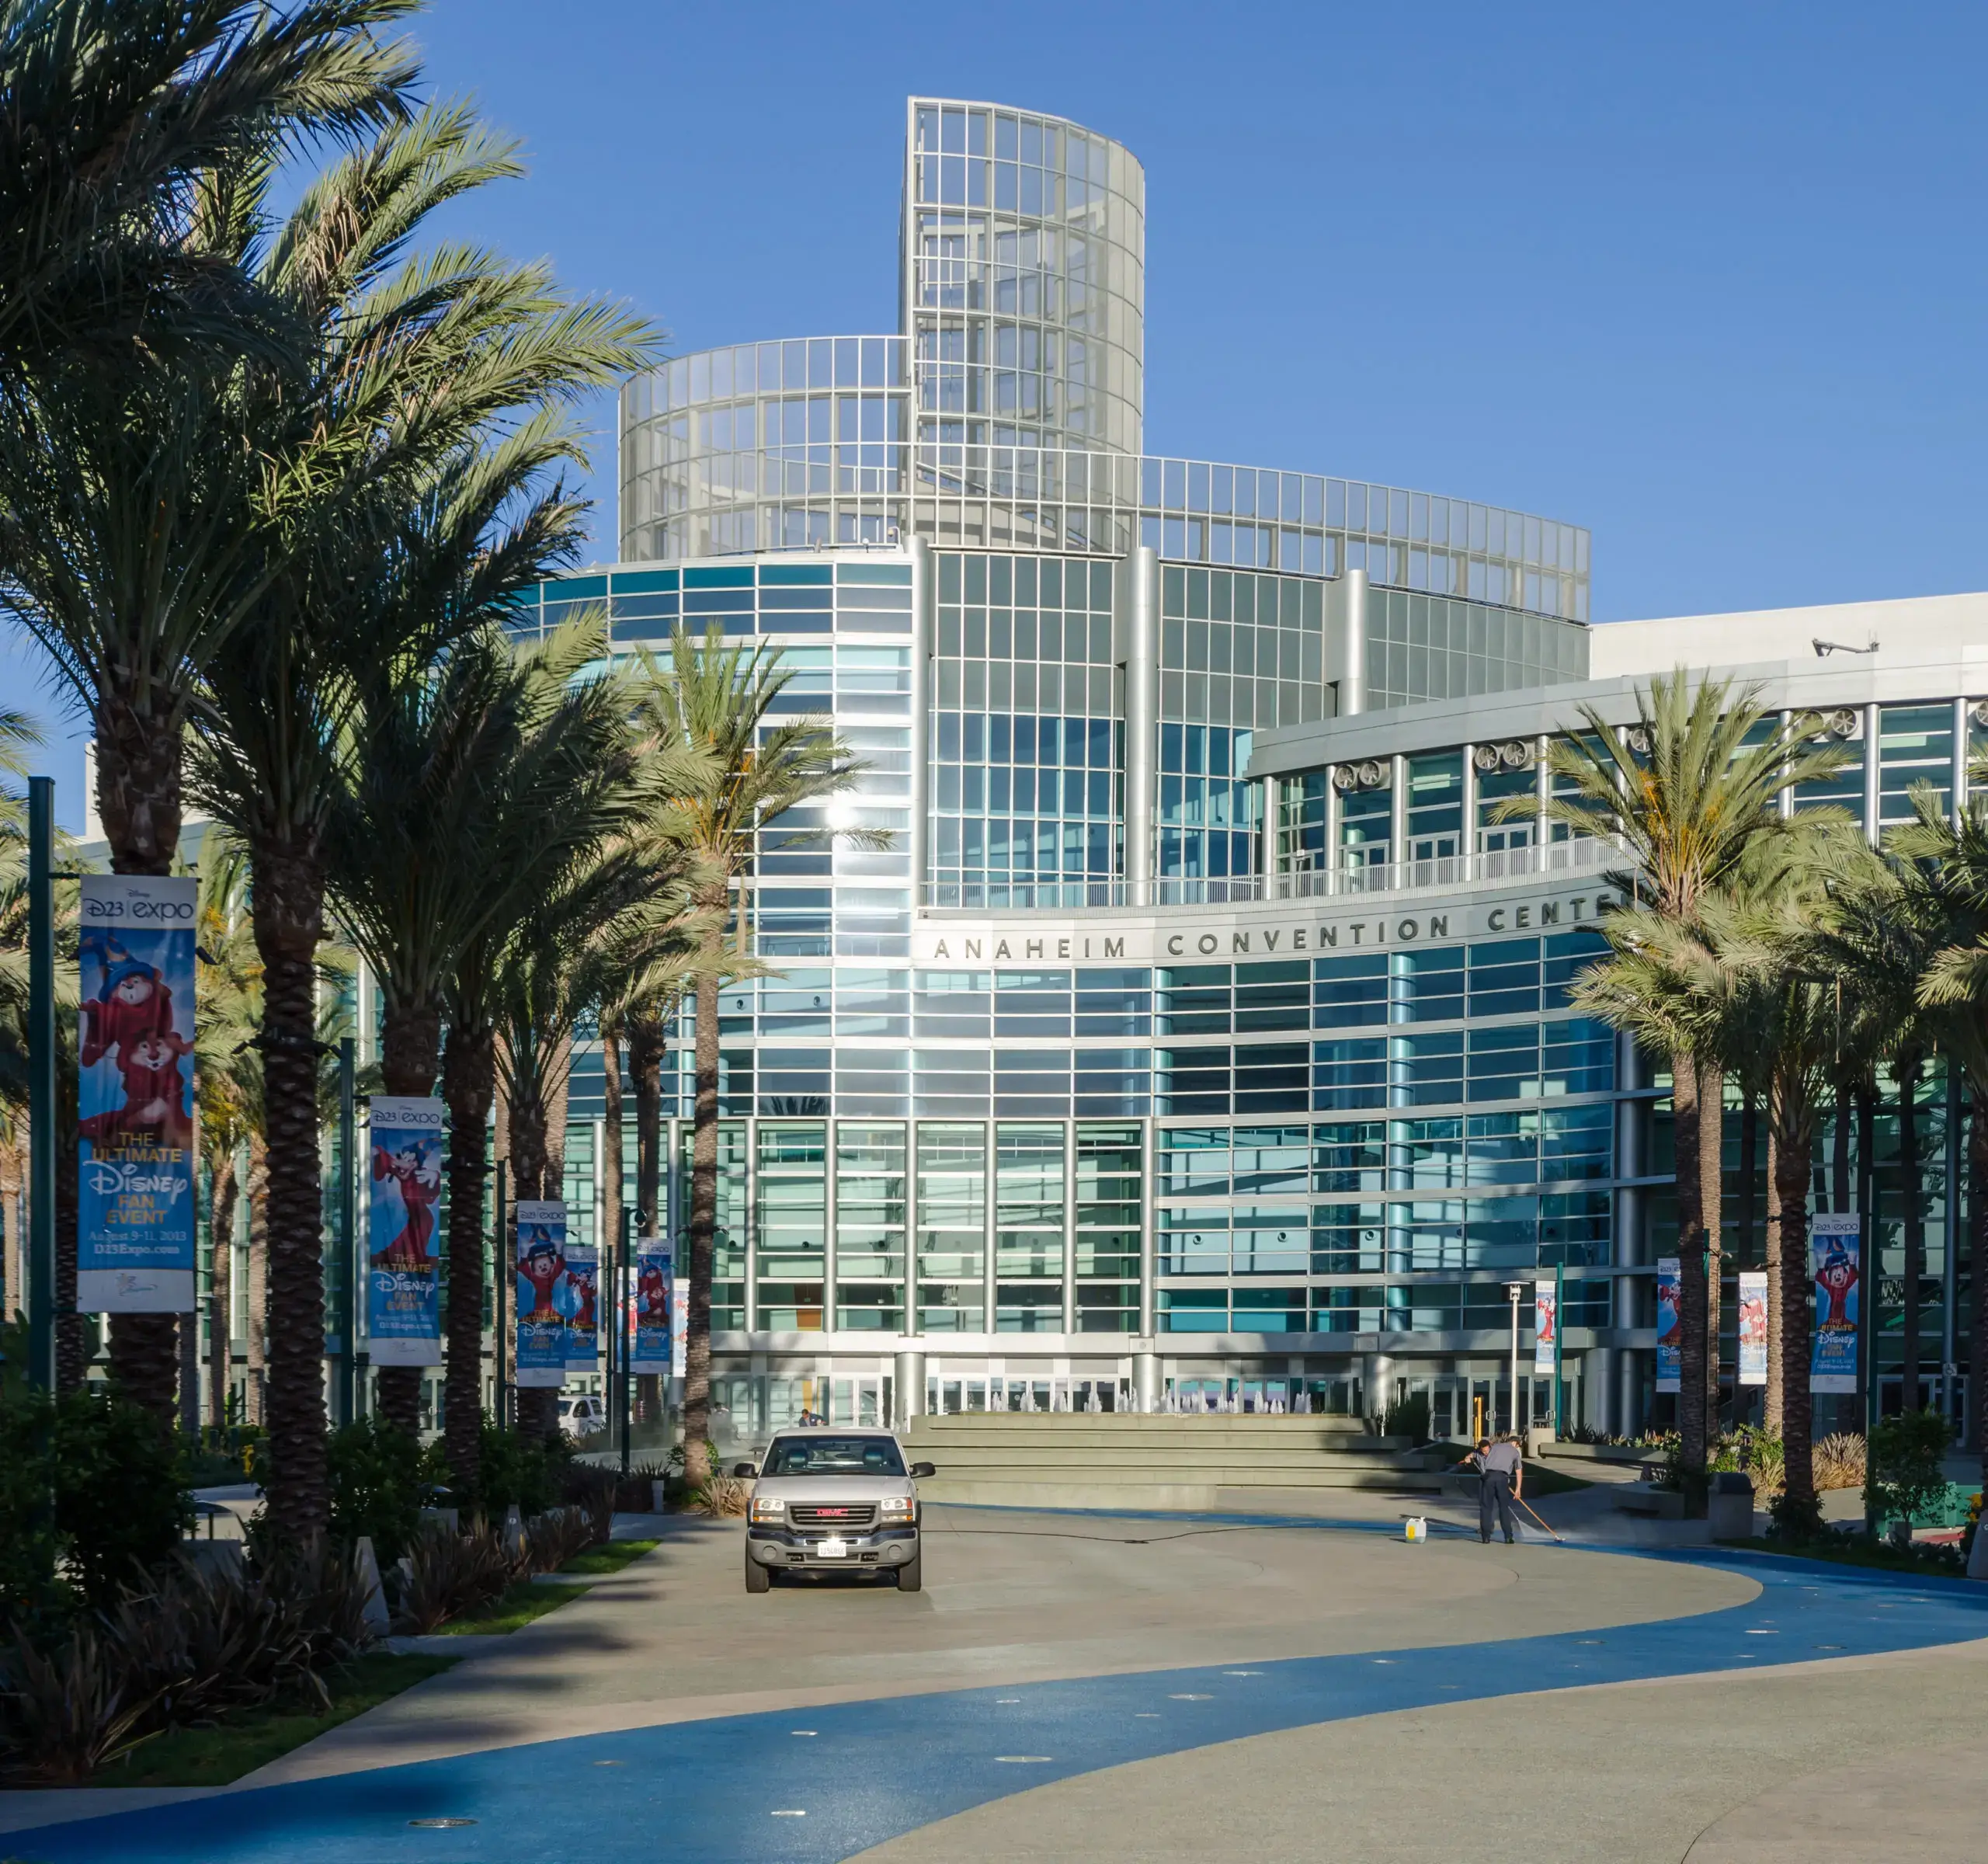 Anaheim Convention Center Back view 2013 1